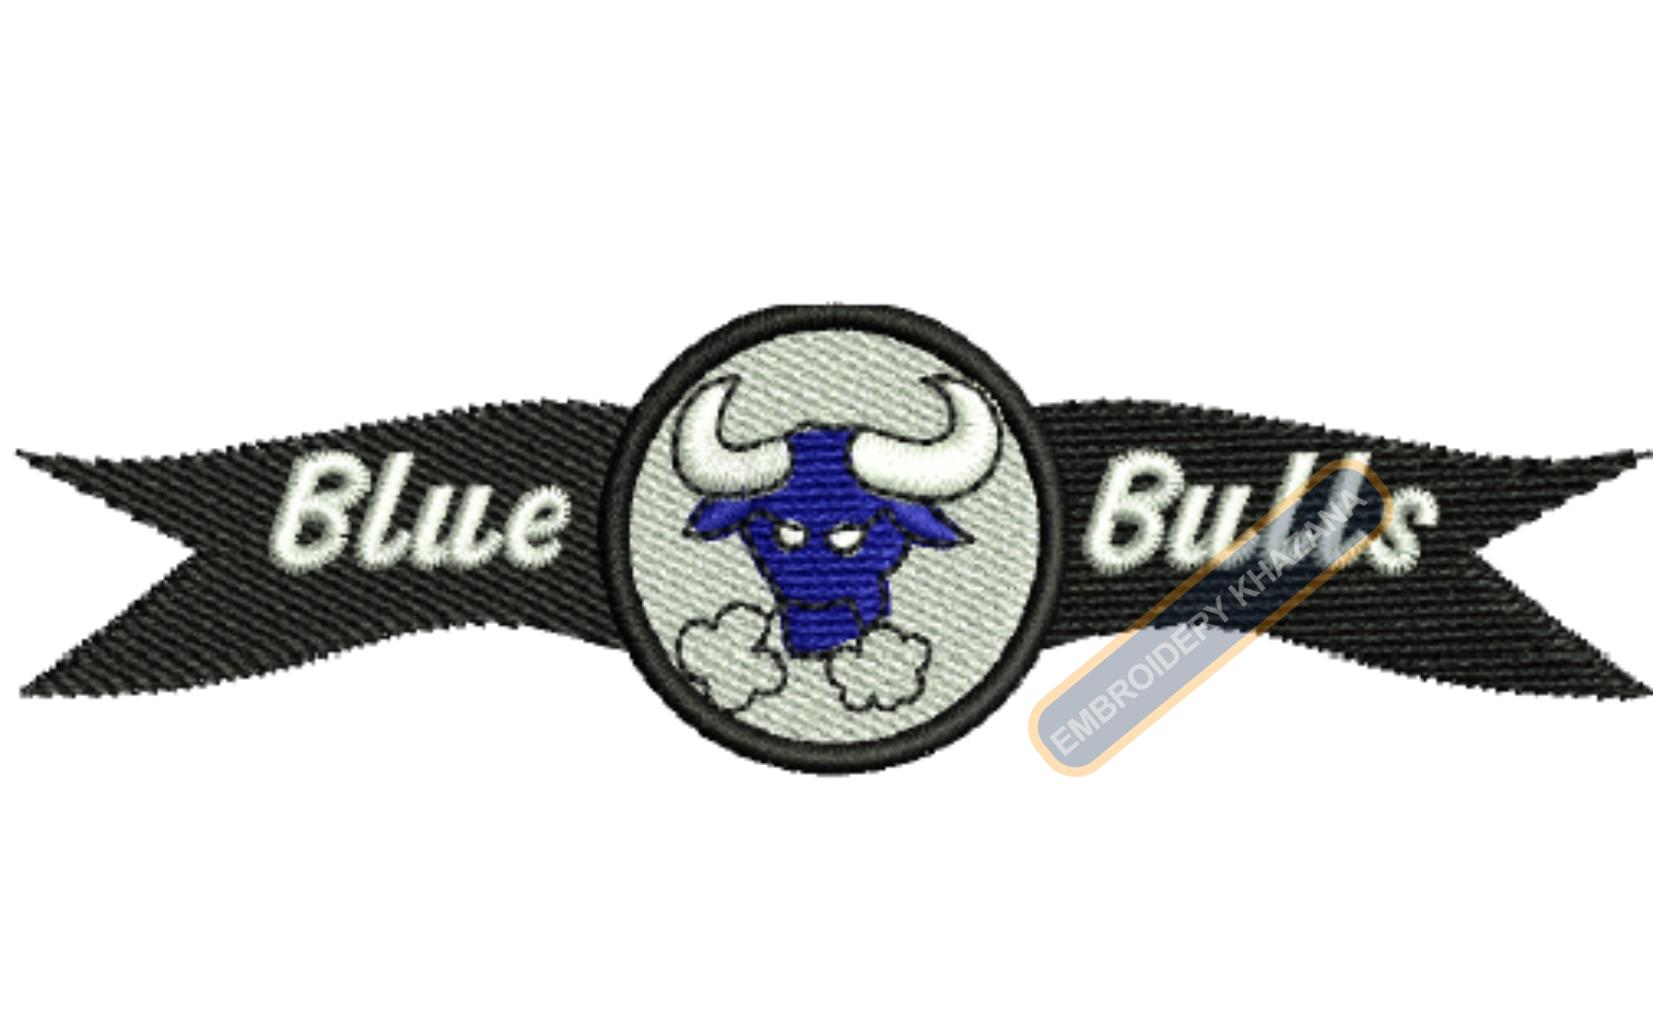 Blue Bulls 